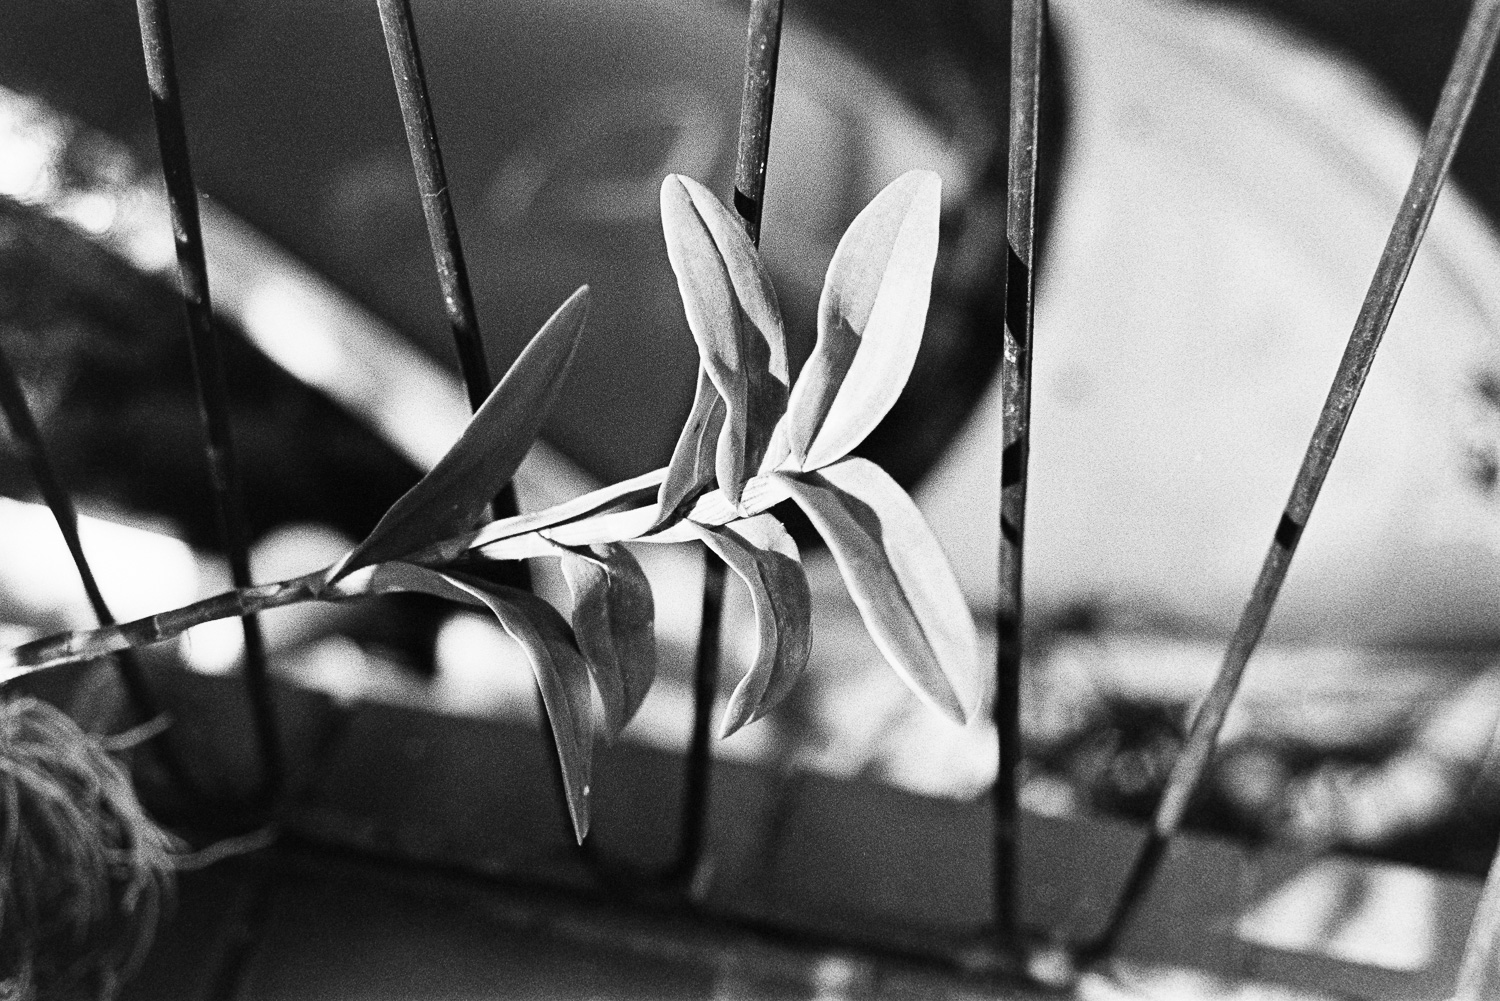  Untitled plant. 